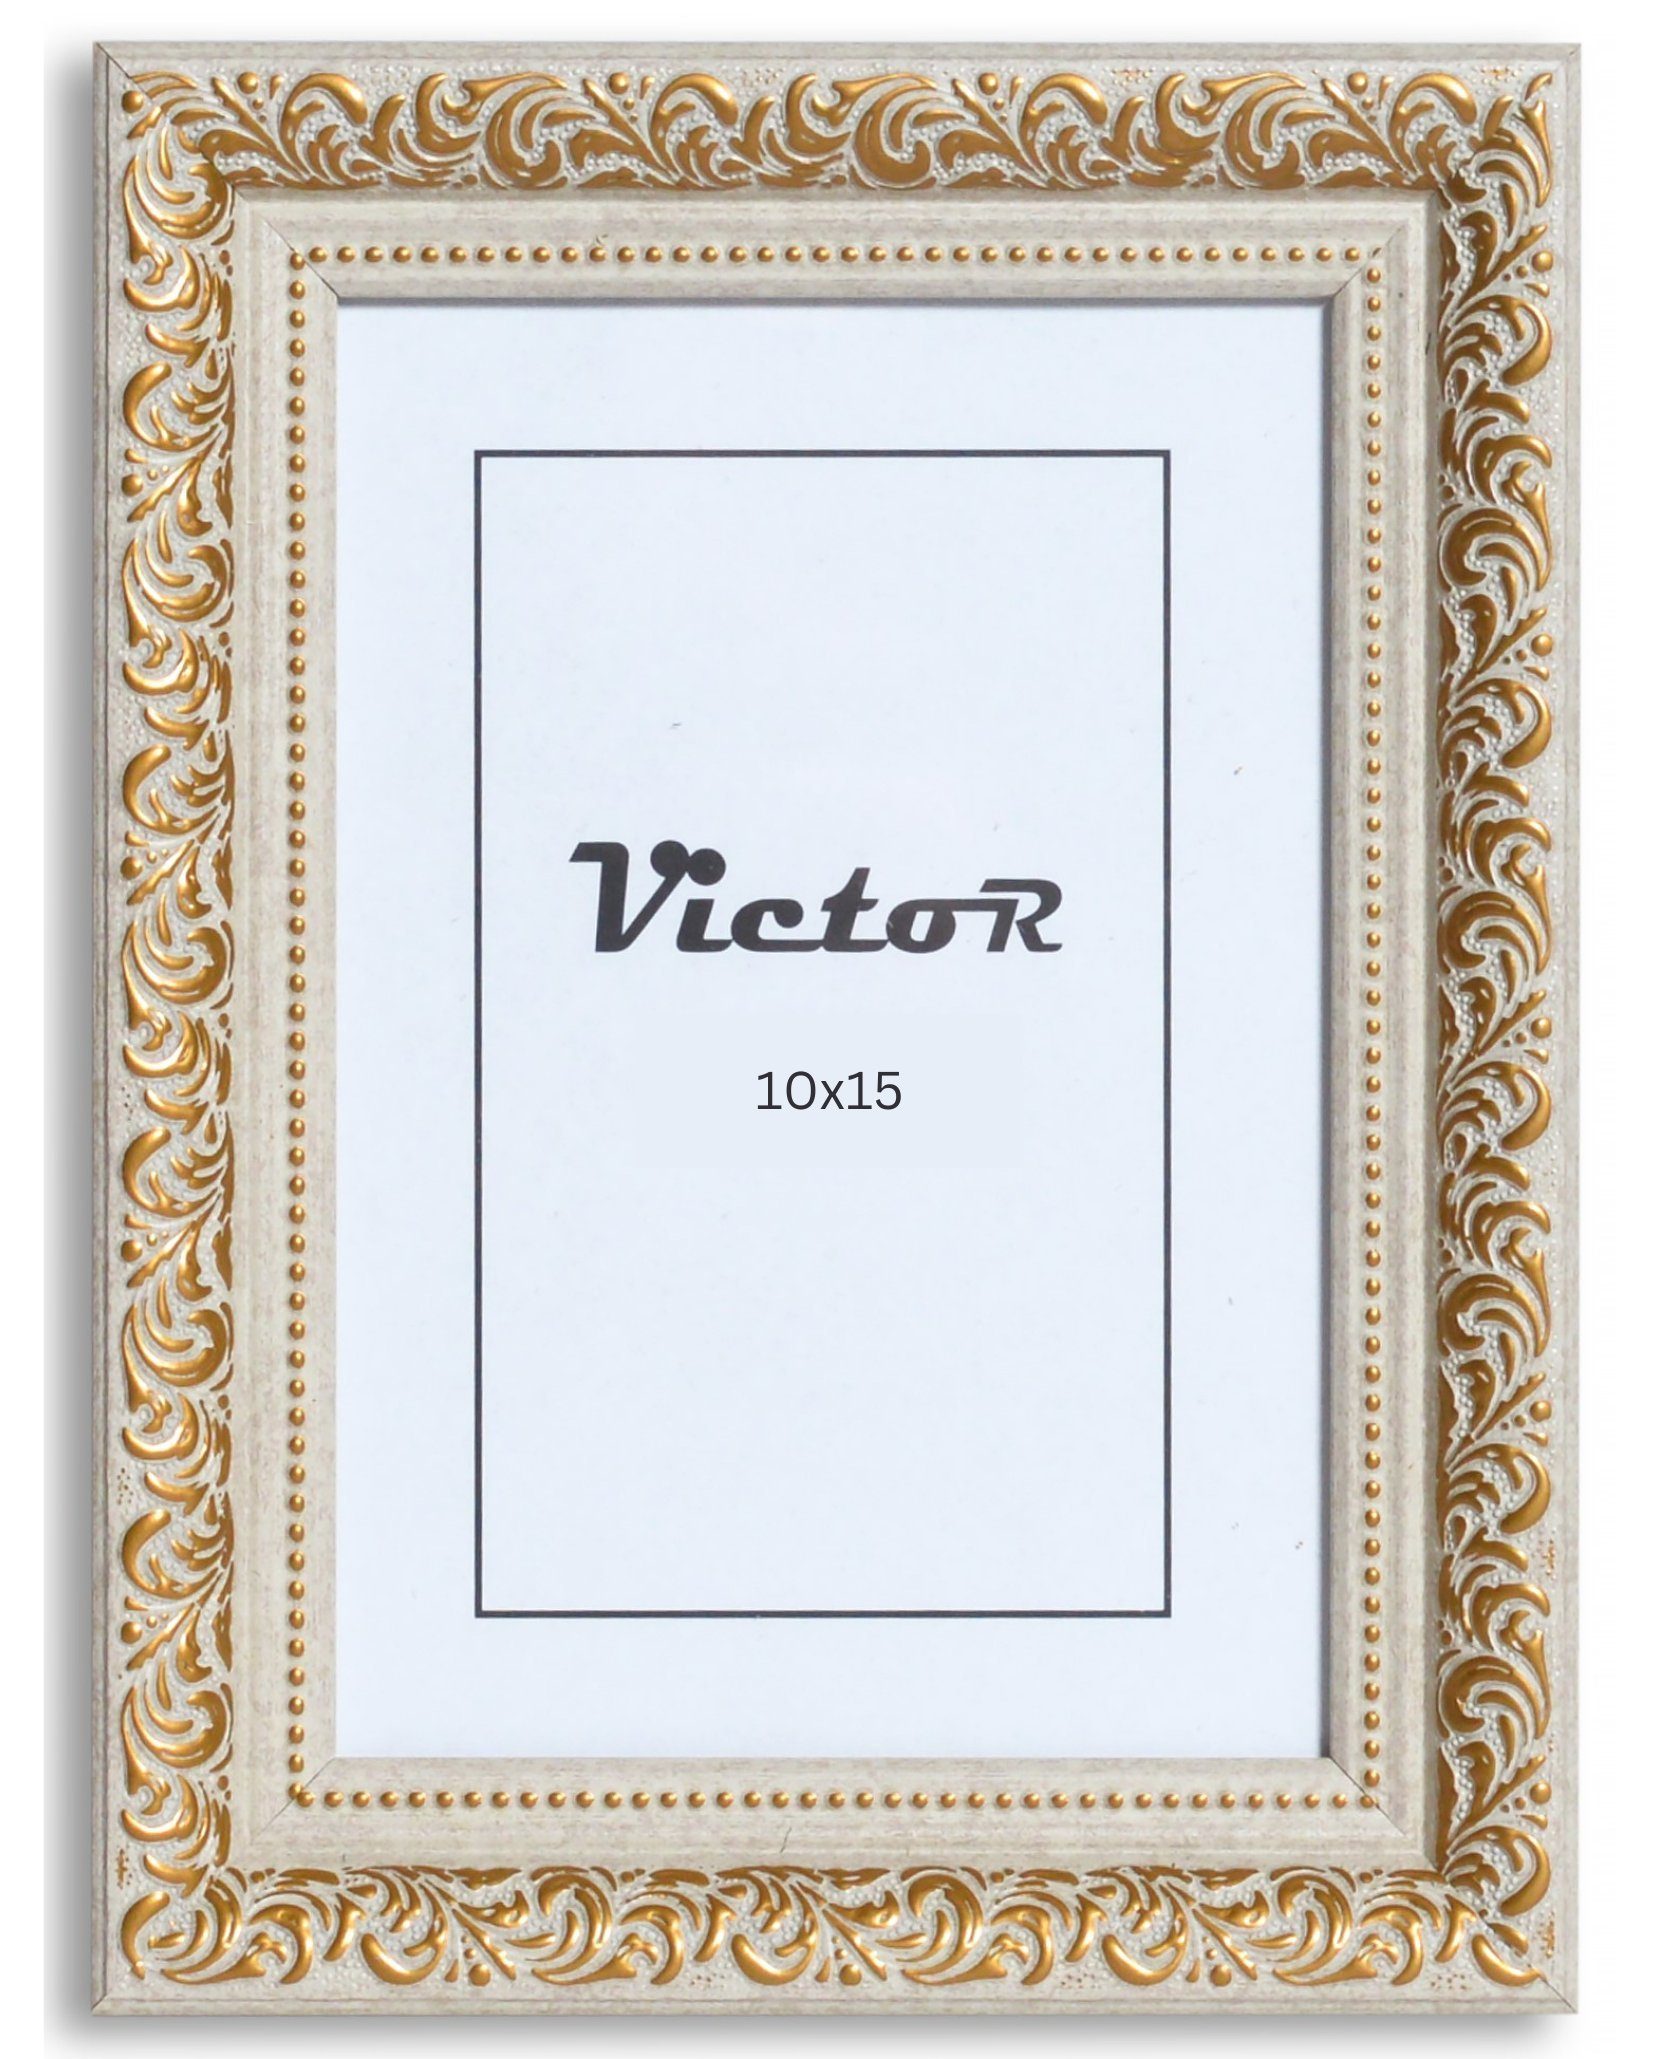 Victor (Zenith) Bilderrahmen Bilderrahmen \"Rubens\" - Farbe: Beige Gold - Größe: 10 x 15 cm, Bilderrahmen 10x15 cm Beige Gold A6, Bilderrahmen Barock, Antik